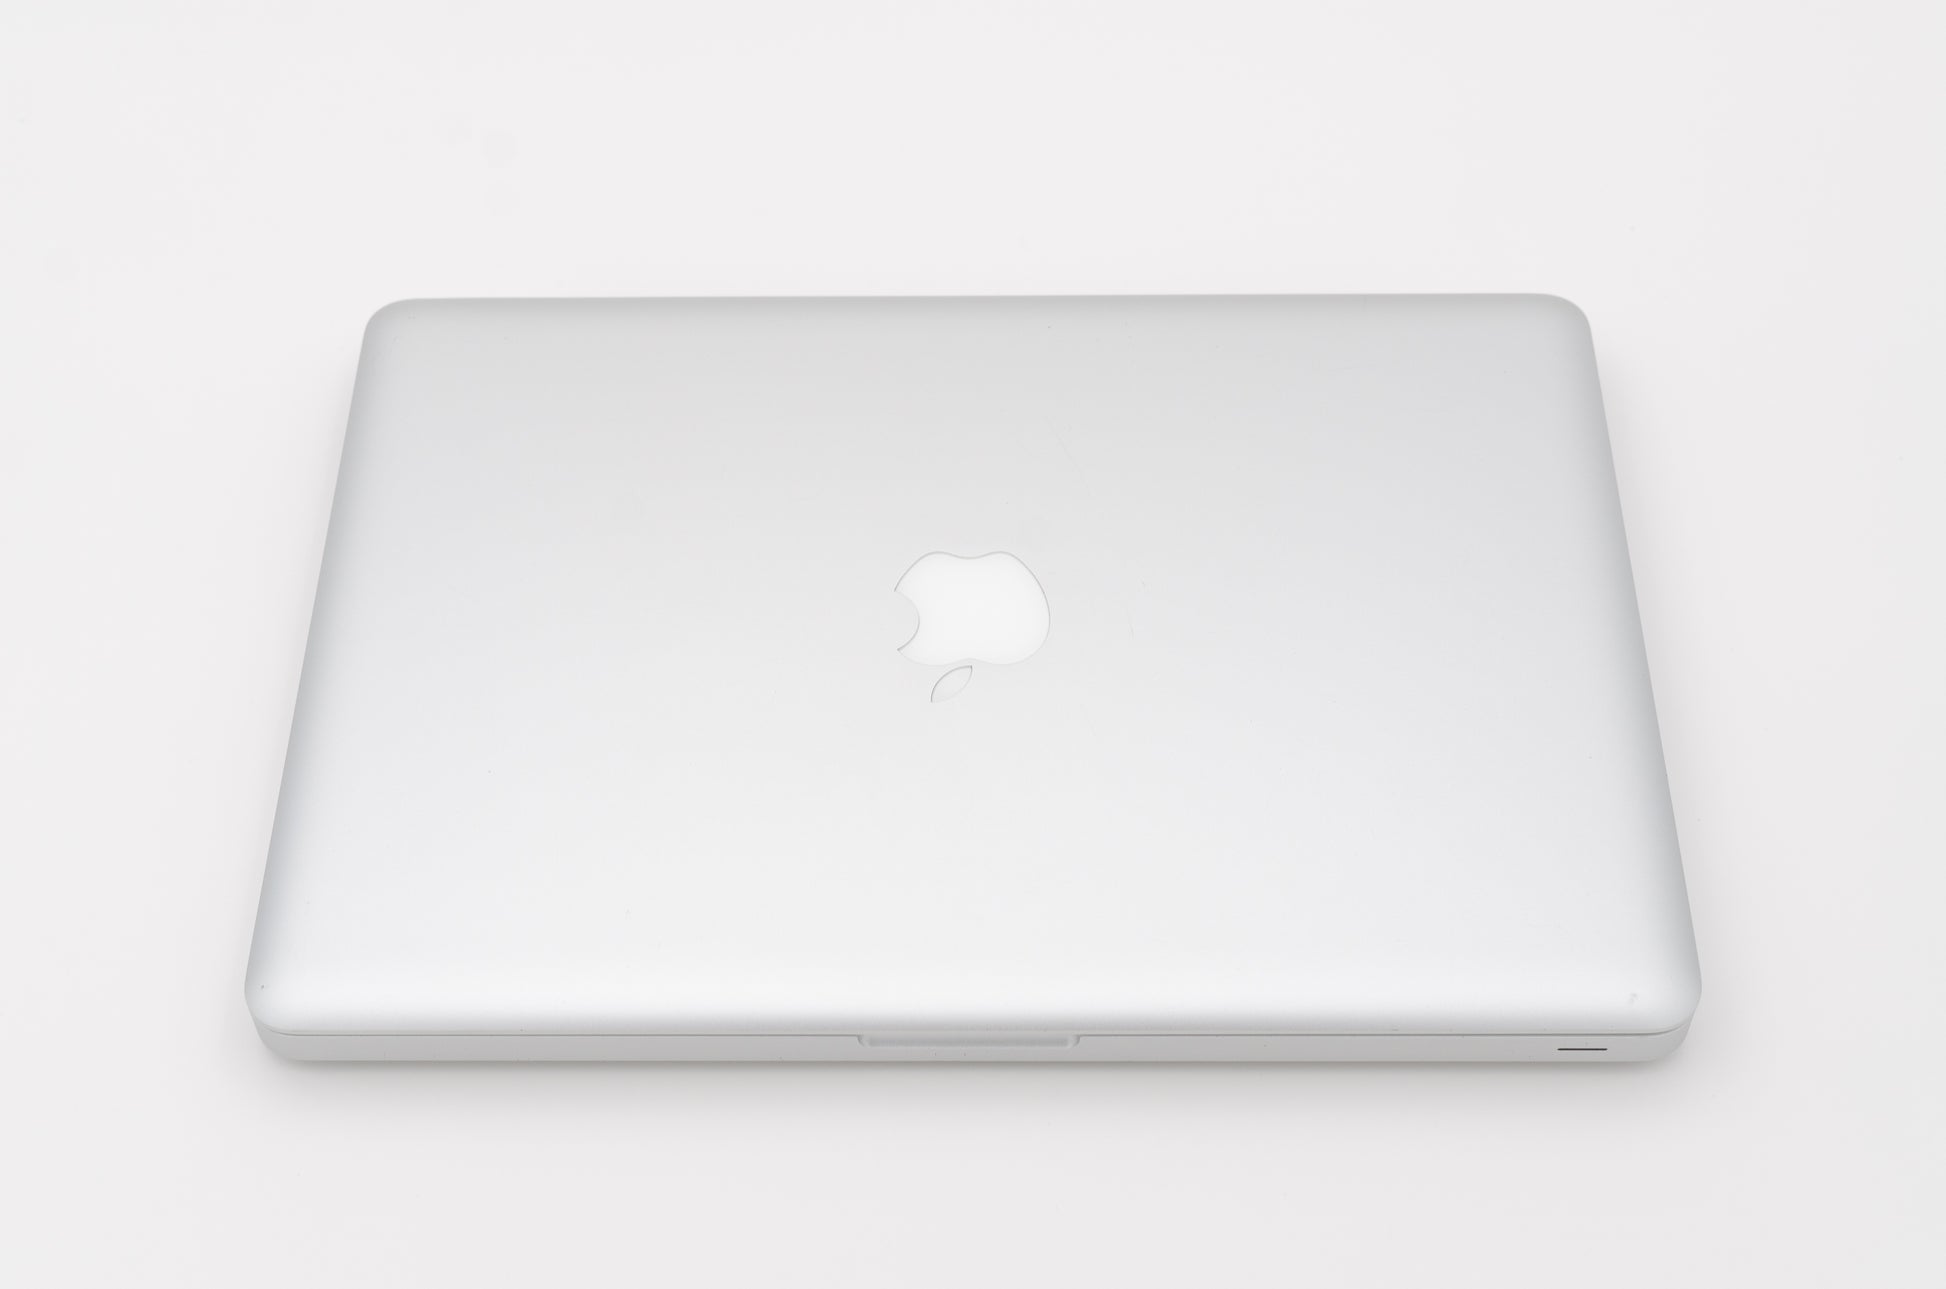 apple-early-2013-13.3-inch-macbook-pro-a1425-aluminum-dci7 - 3ghz processor, 8gb ram, hd 4000 - 512mb gpu-me662ll/a-3